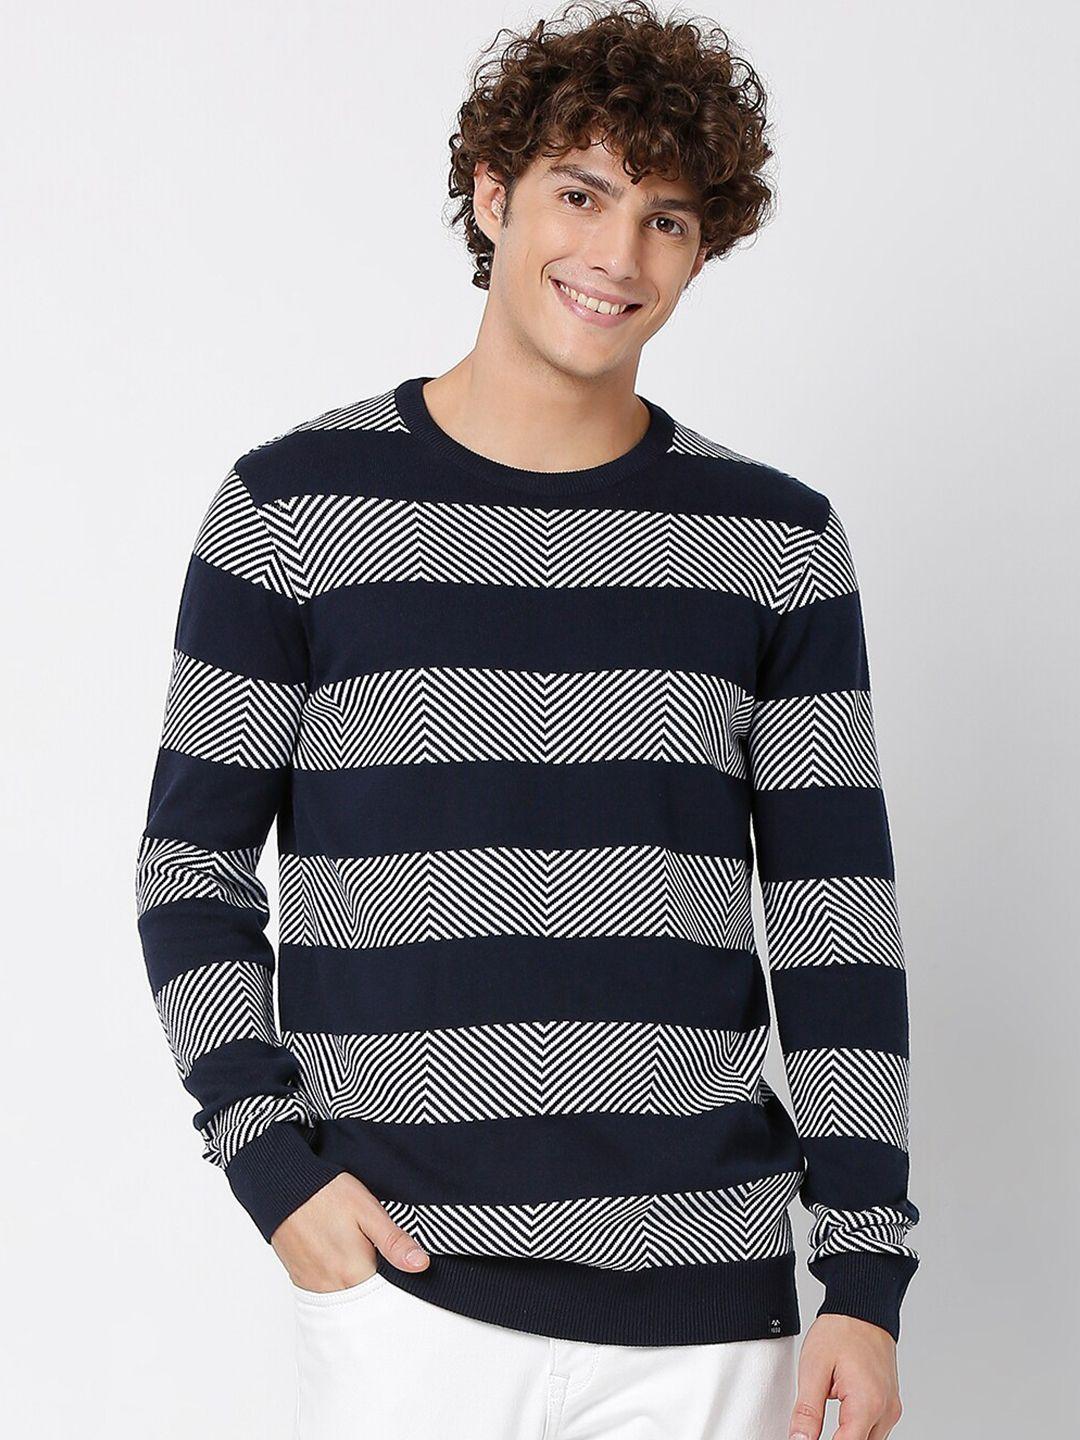 mufti men navy blue & white striped pullover sweater